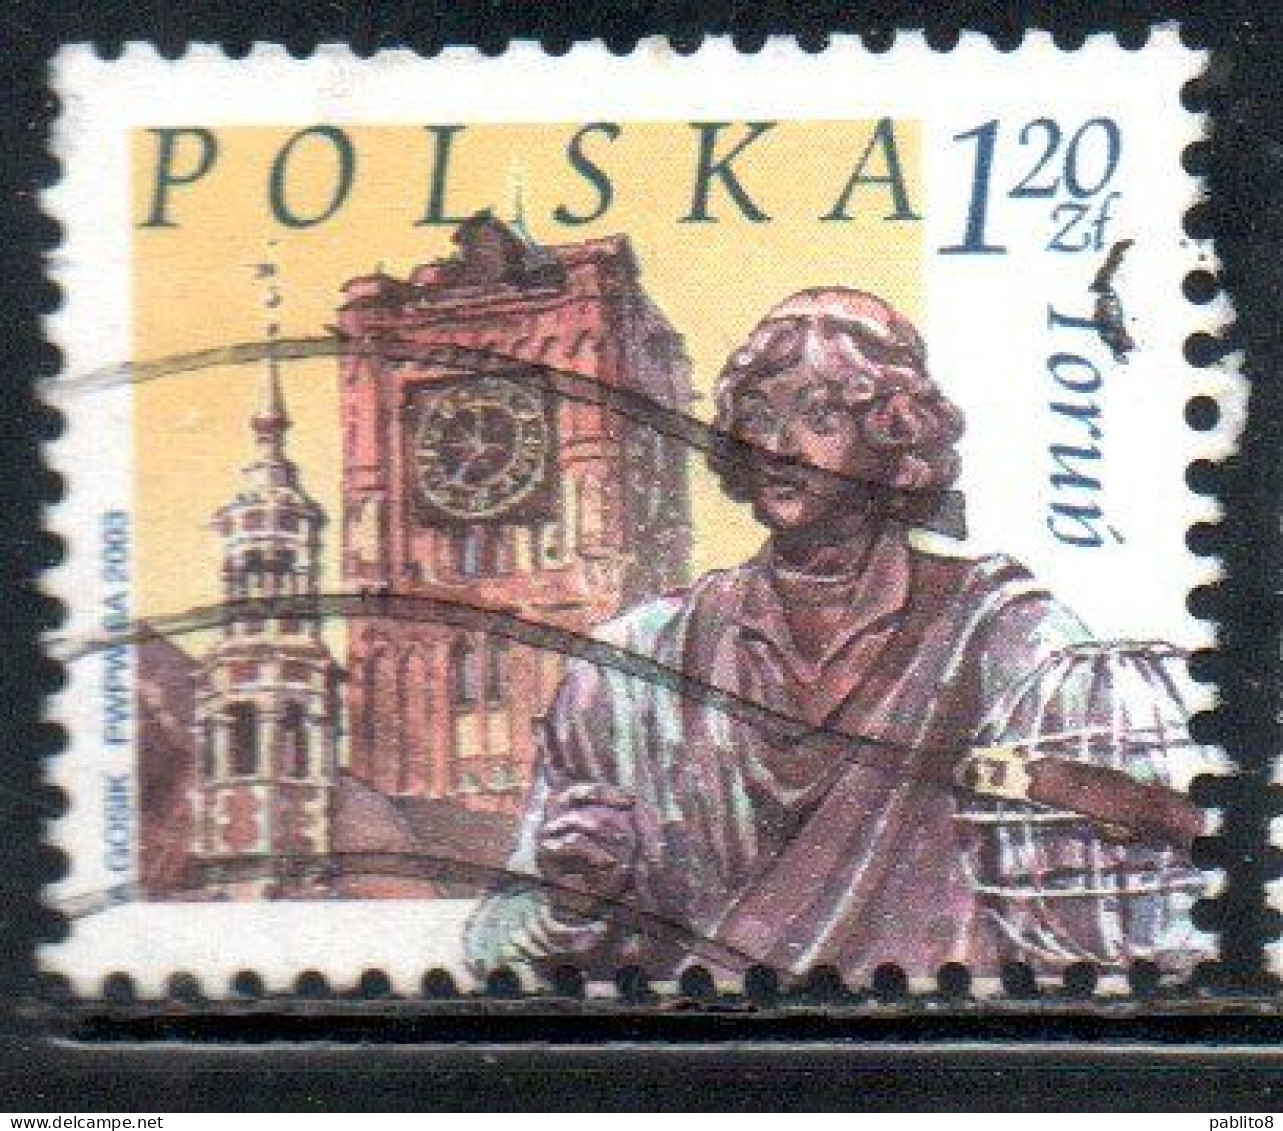 POLONIA POLAND POLSKA 2003 TOWER OF OLD CITY HALL STATUE OF NICOLAUS COPERNICUS TORUN 1.20z USED USATO OBLITERE' - Gebraucht